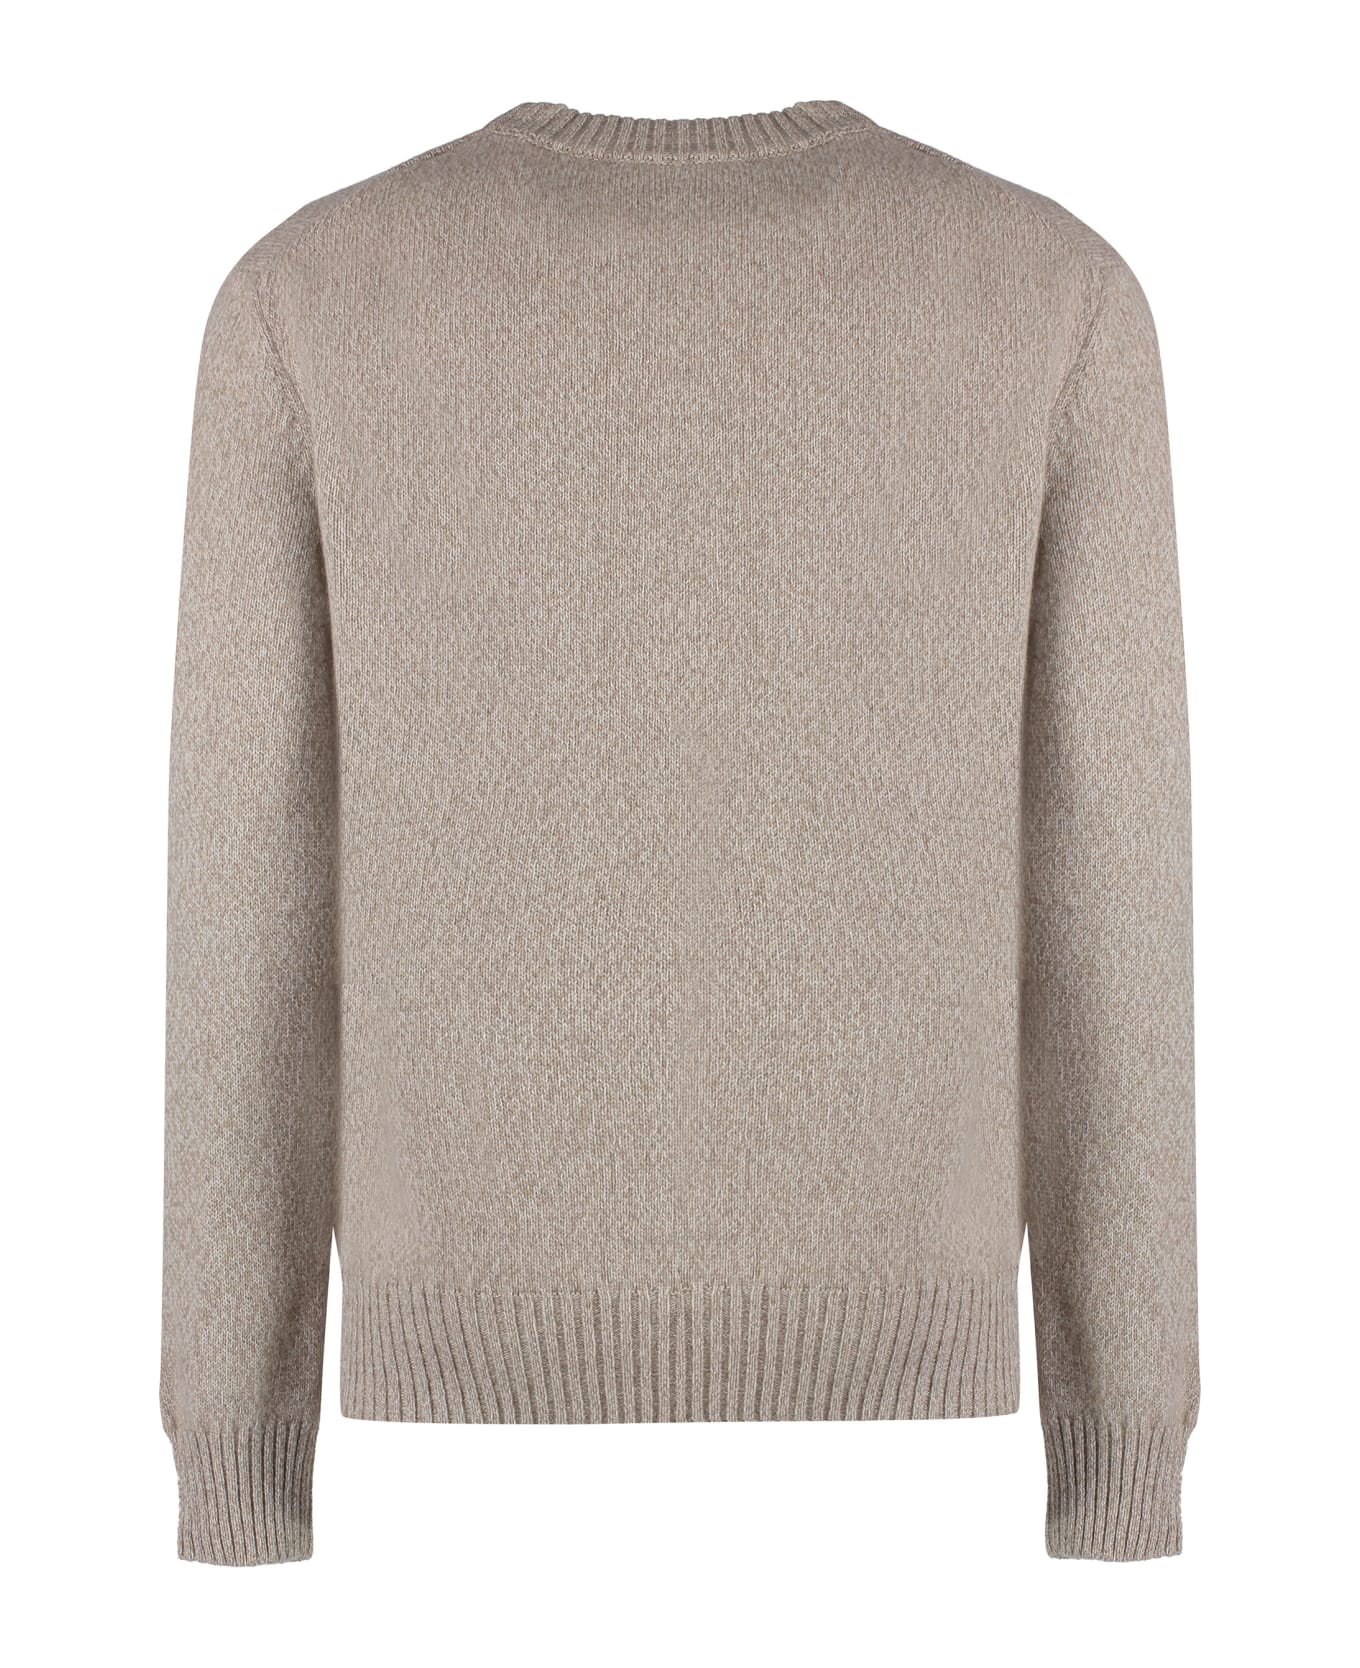 Ami Alexandre Mattiussi Wool And Cashmere Sweater - Beige